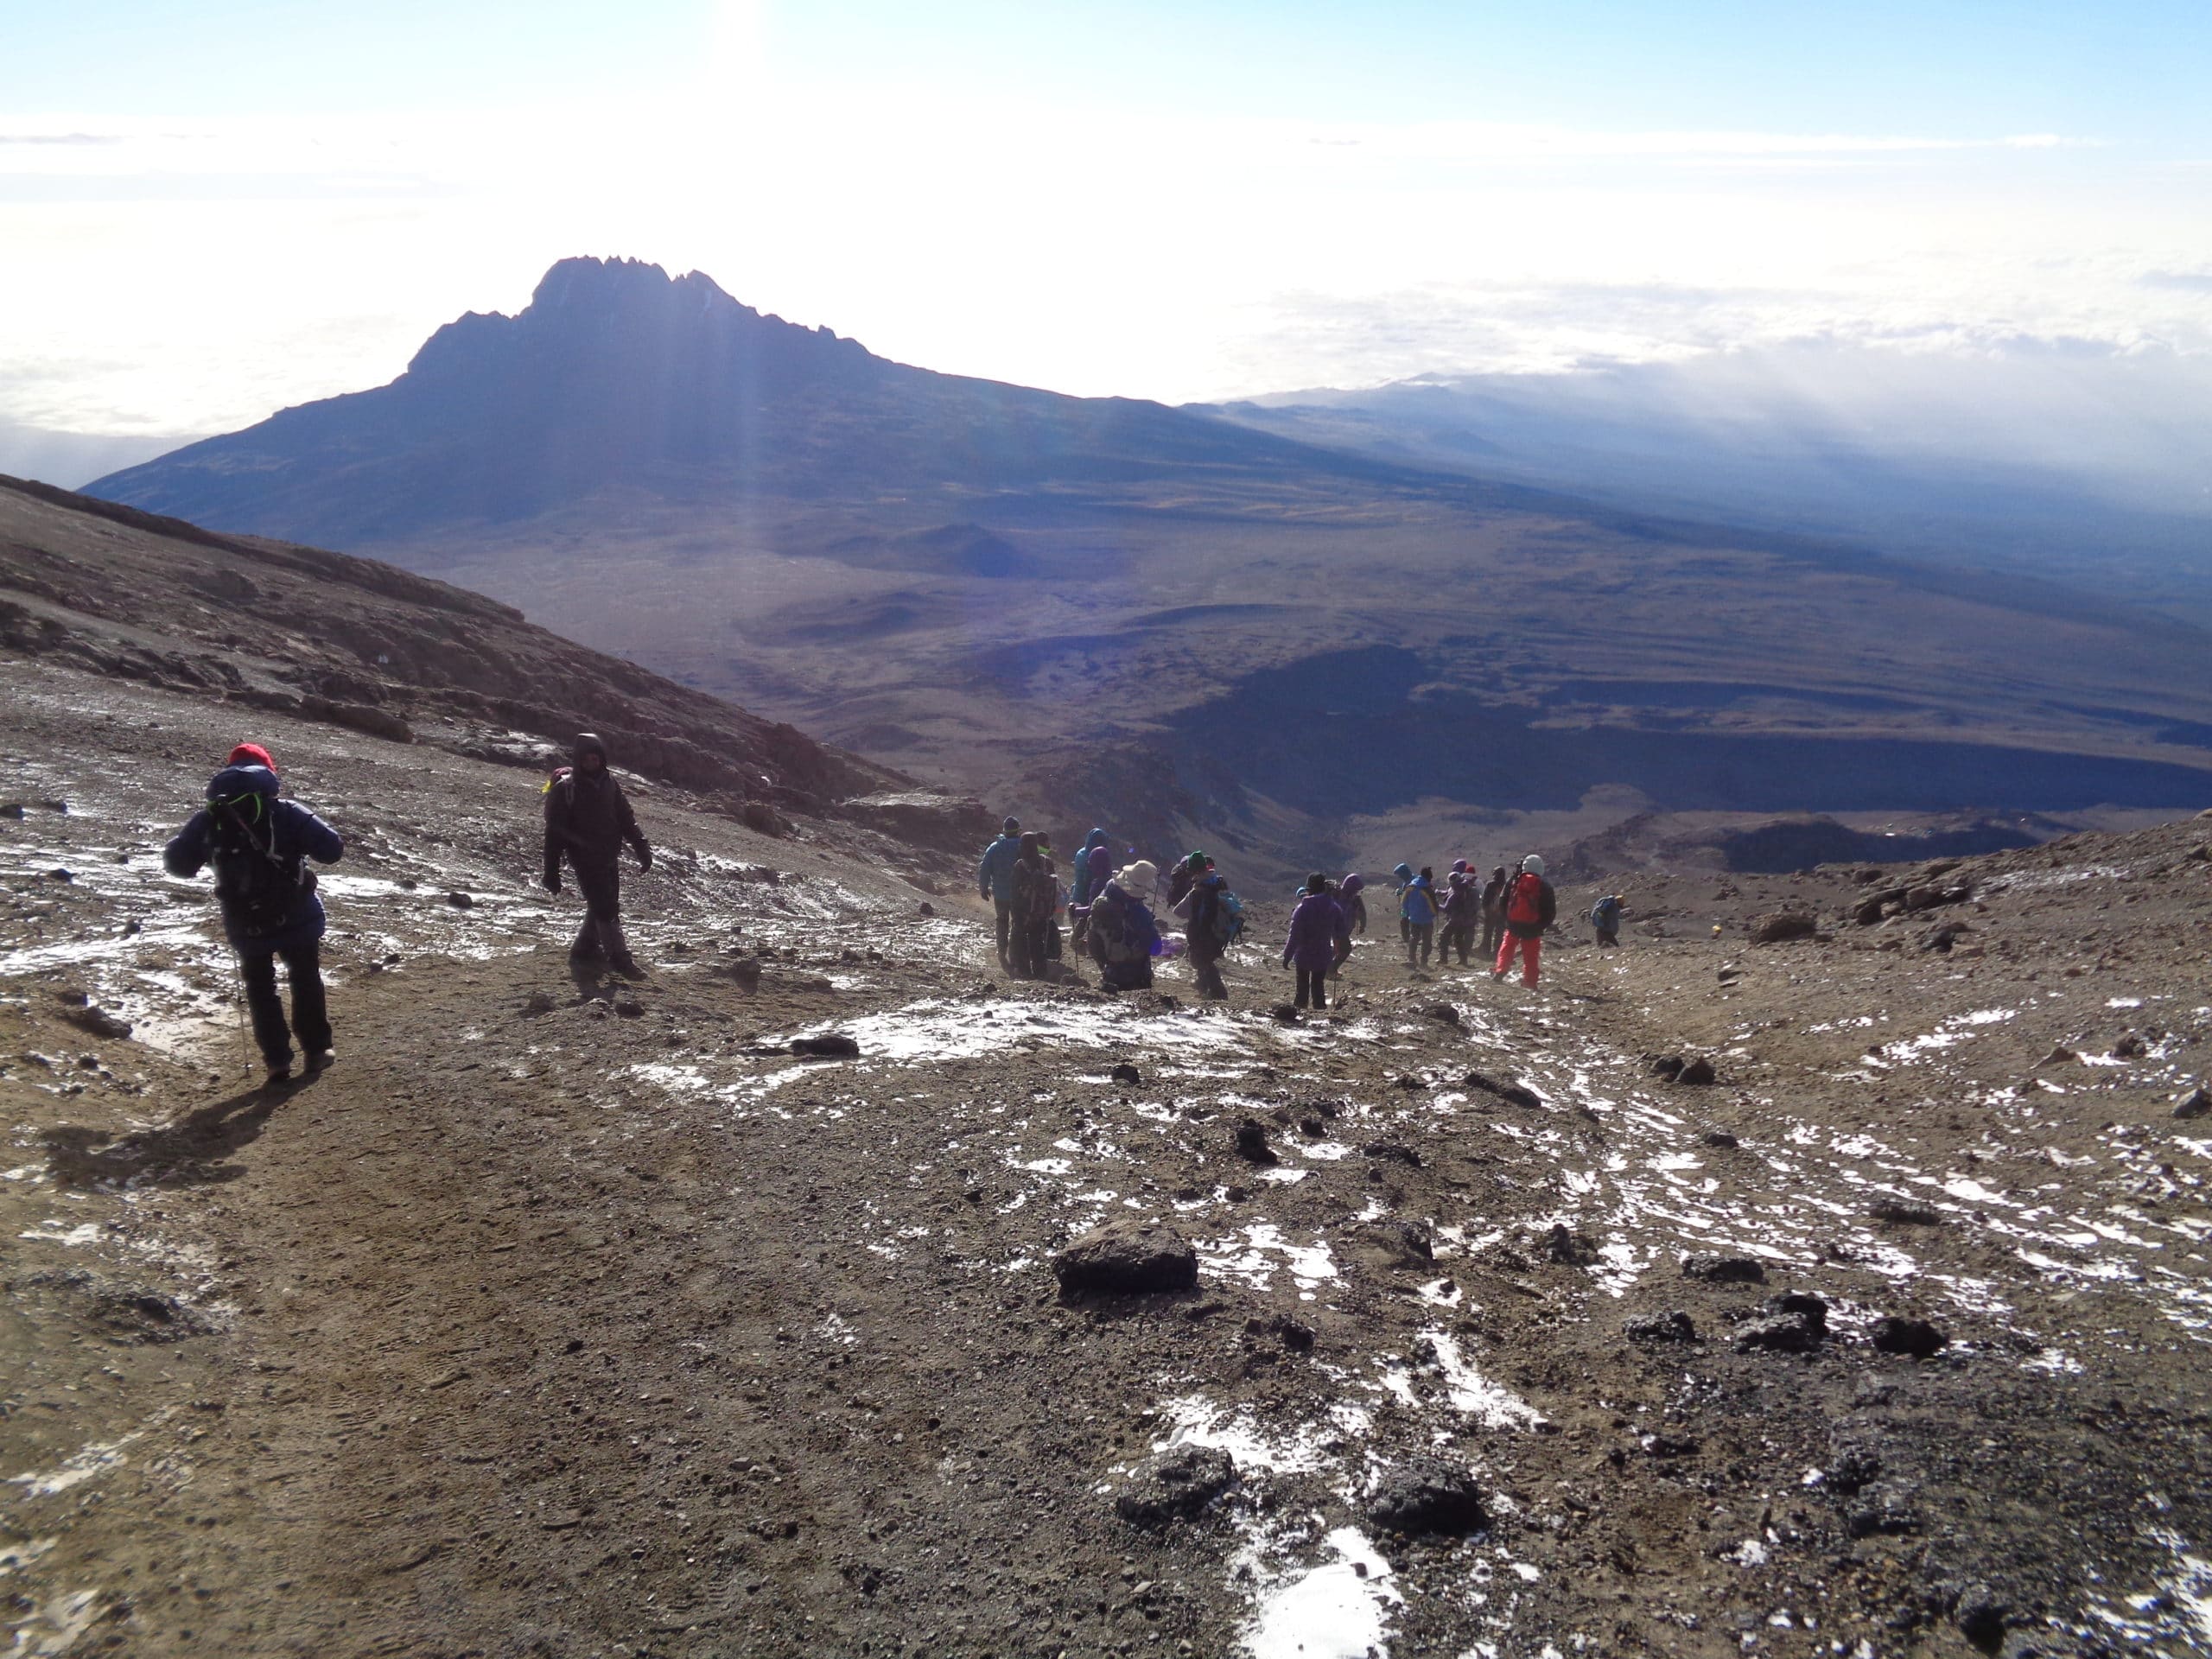 Climbing Kilimanjaro is for trekkers